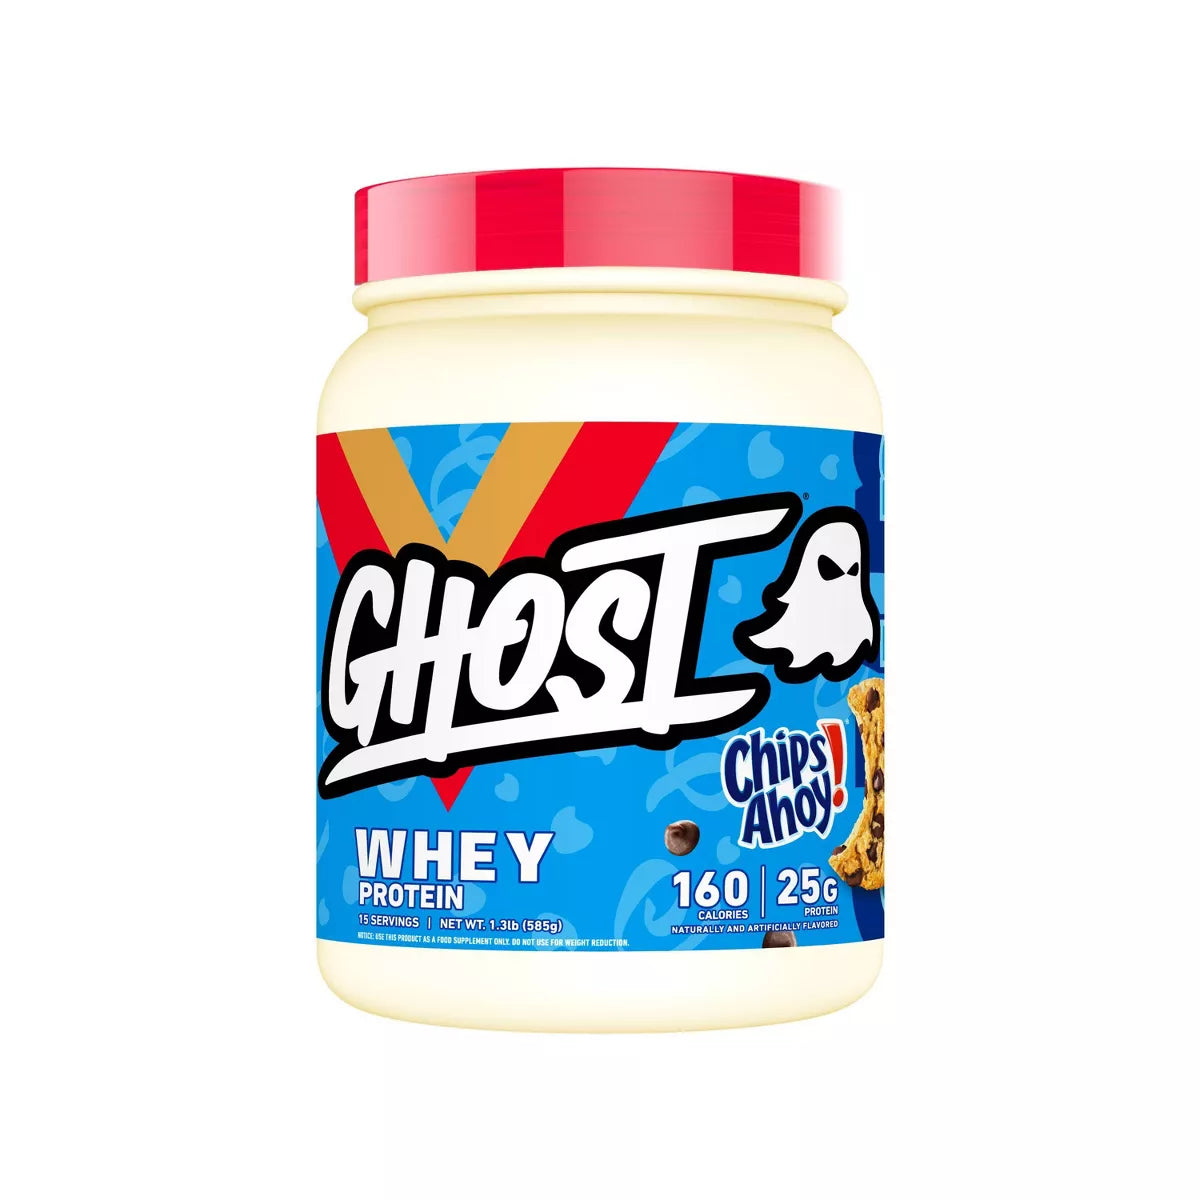 GHOST Whey Protein Powder - Chips Ahoy - 22oz